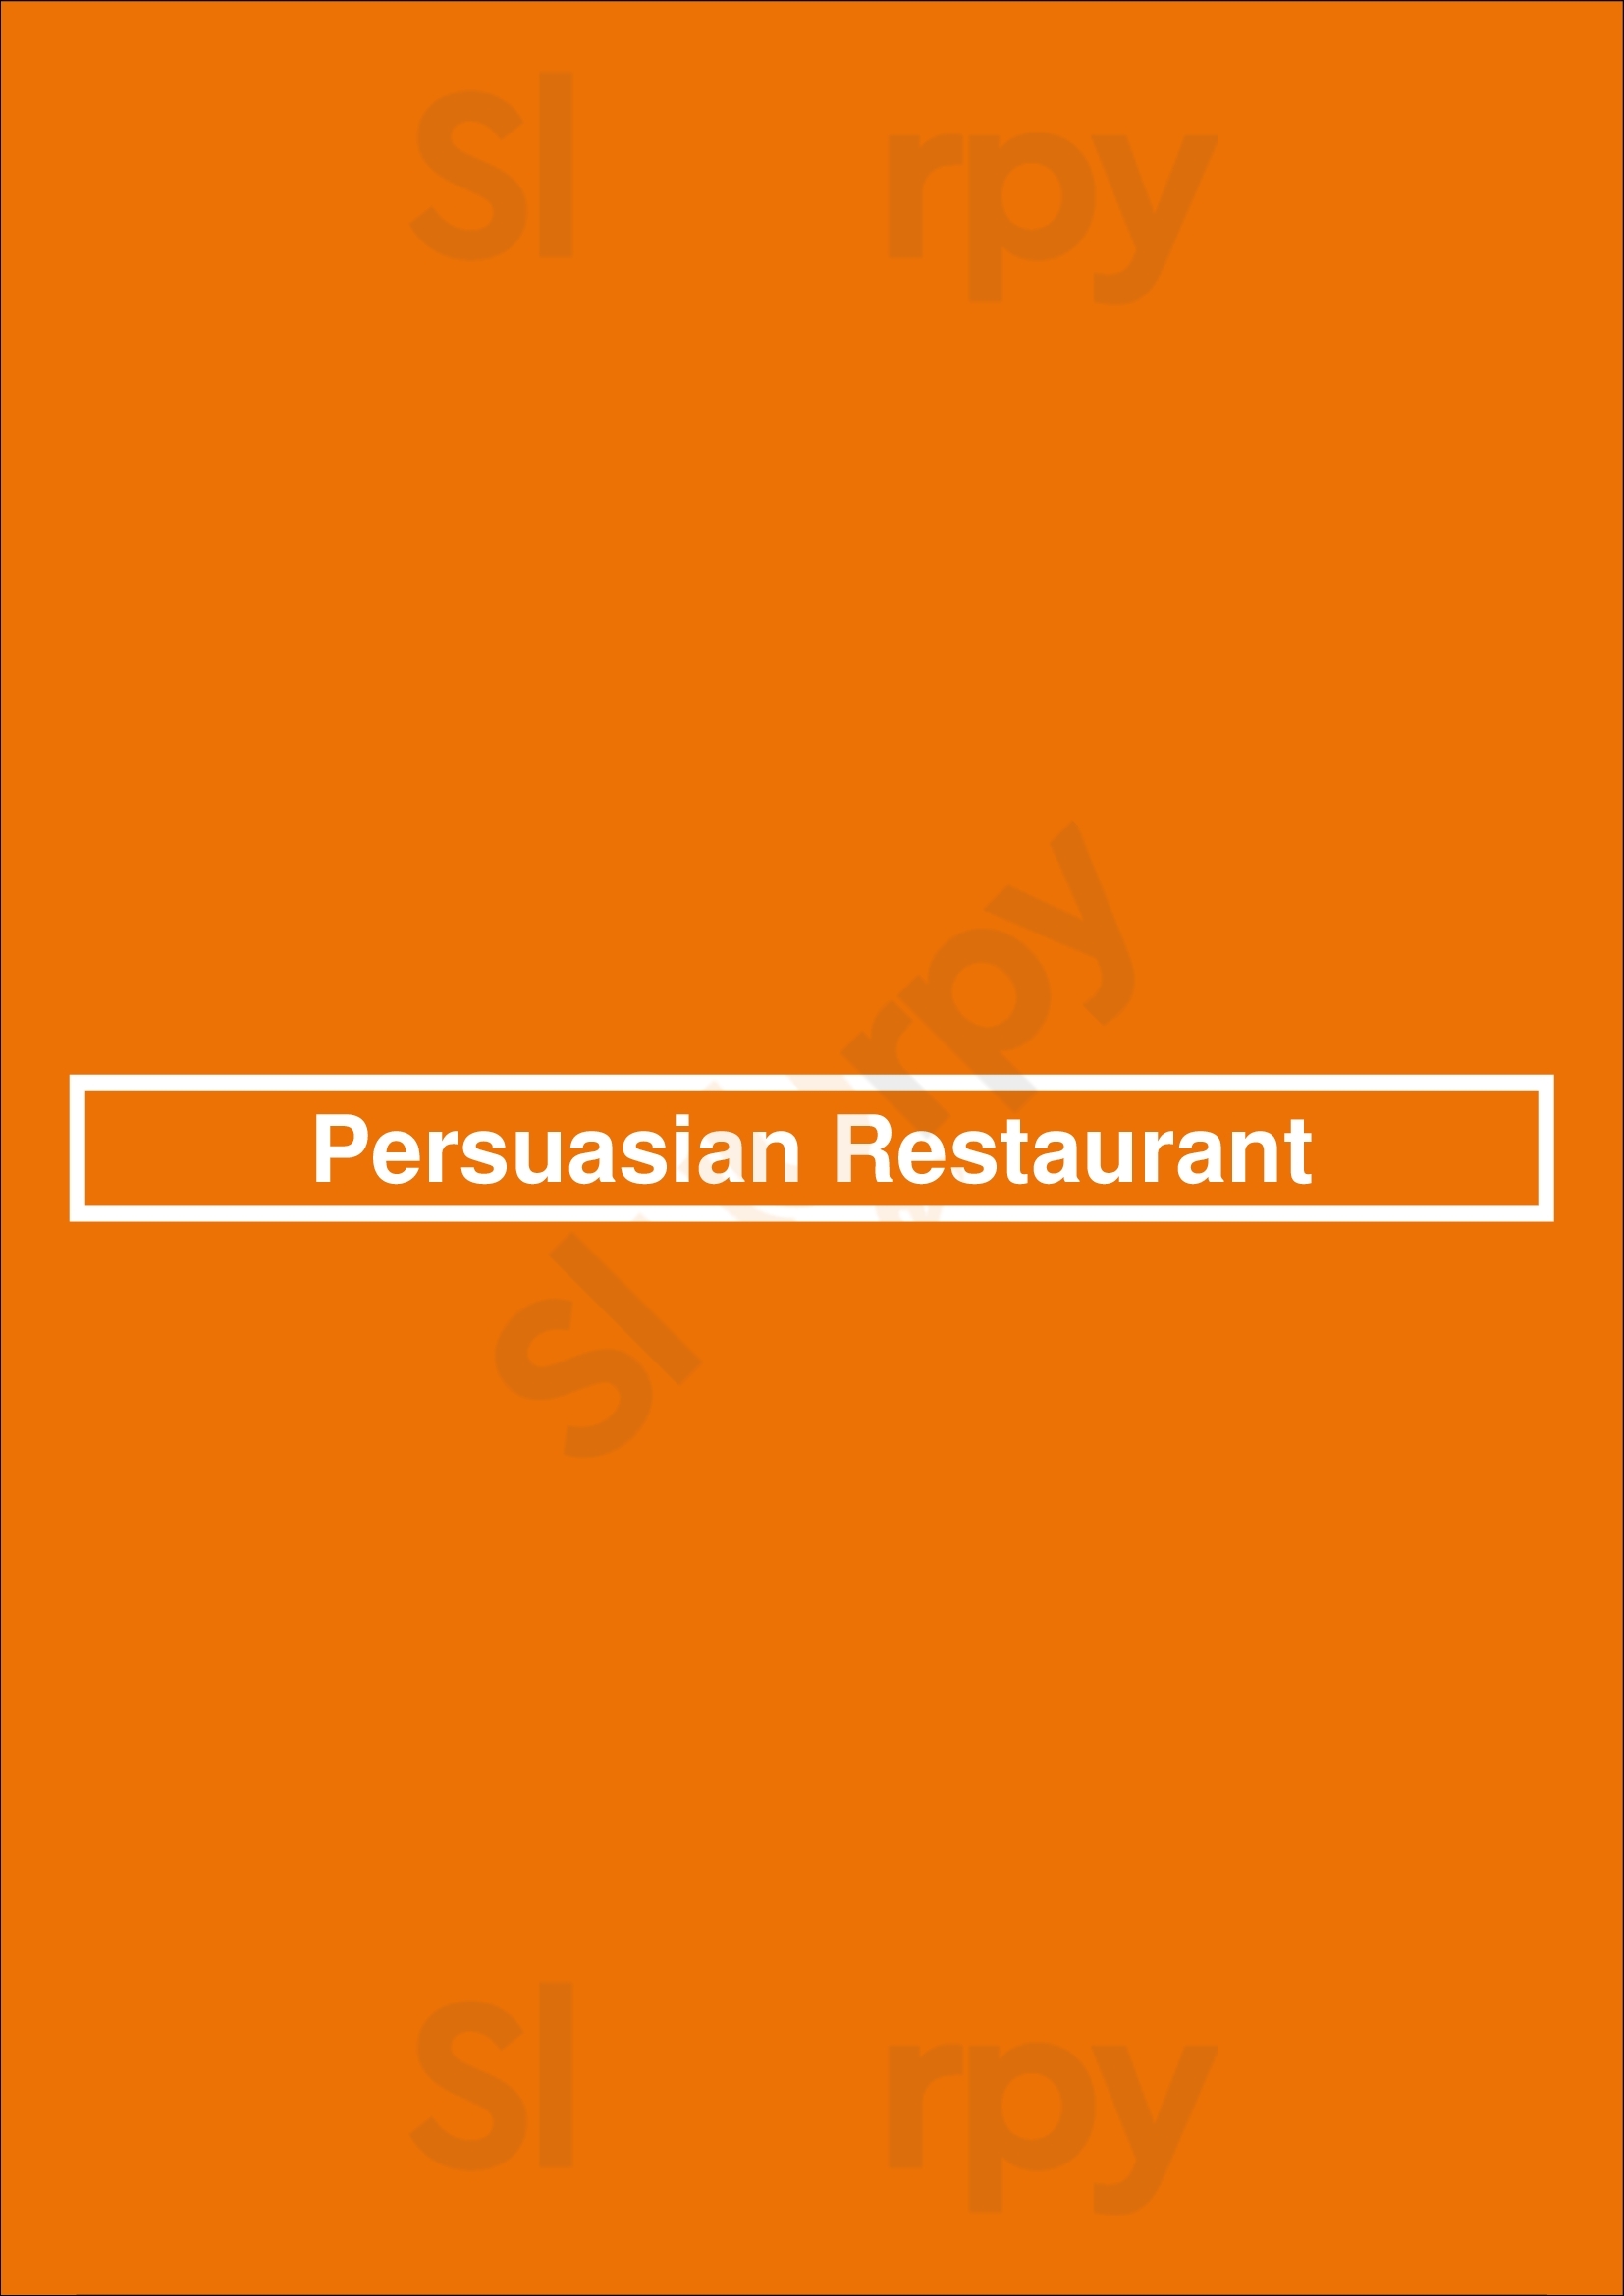 Persuasian Restaurant Charlotte Menu - 1